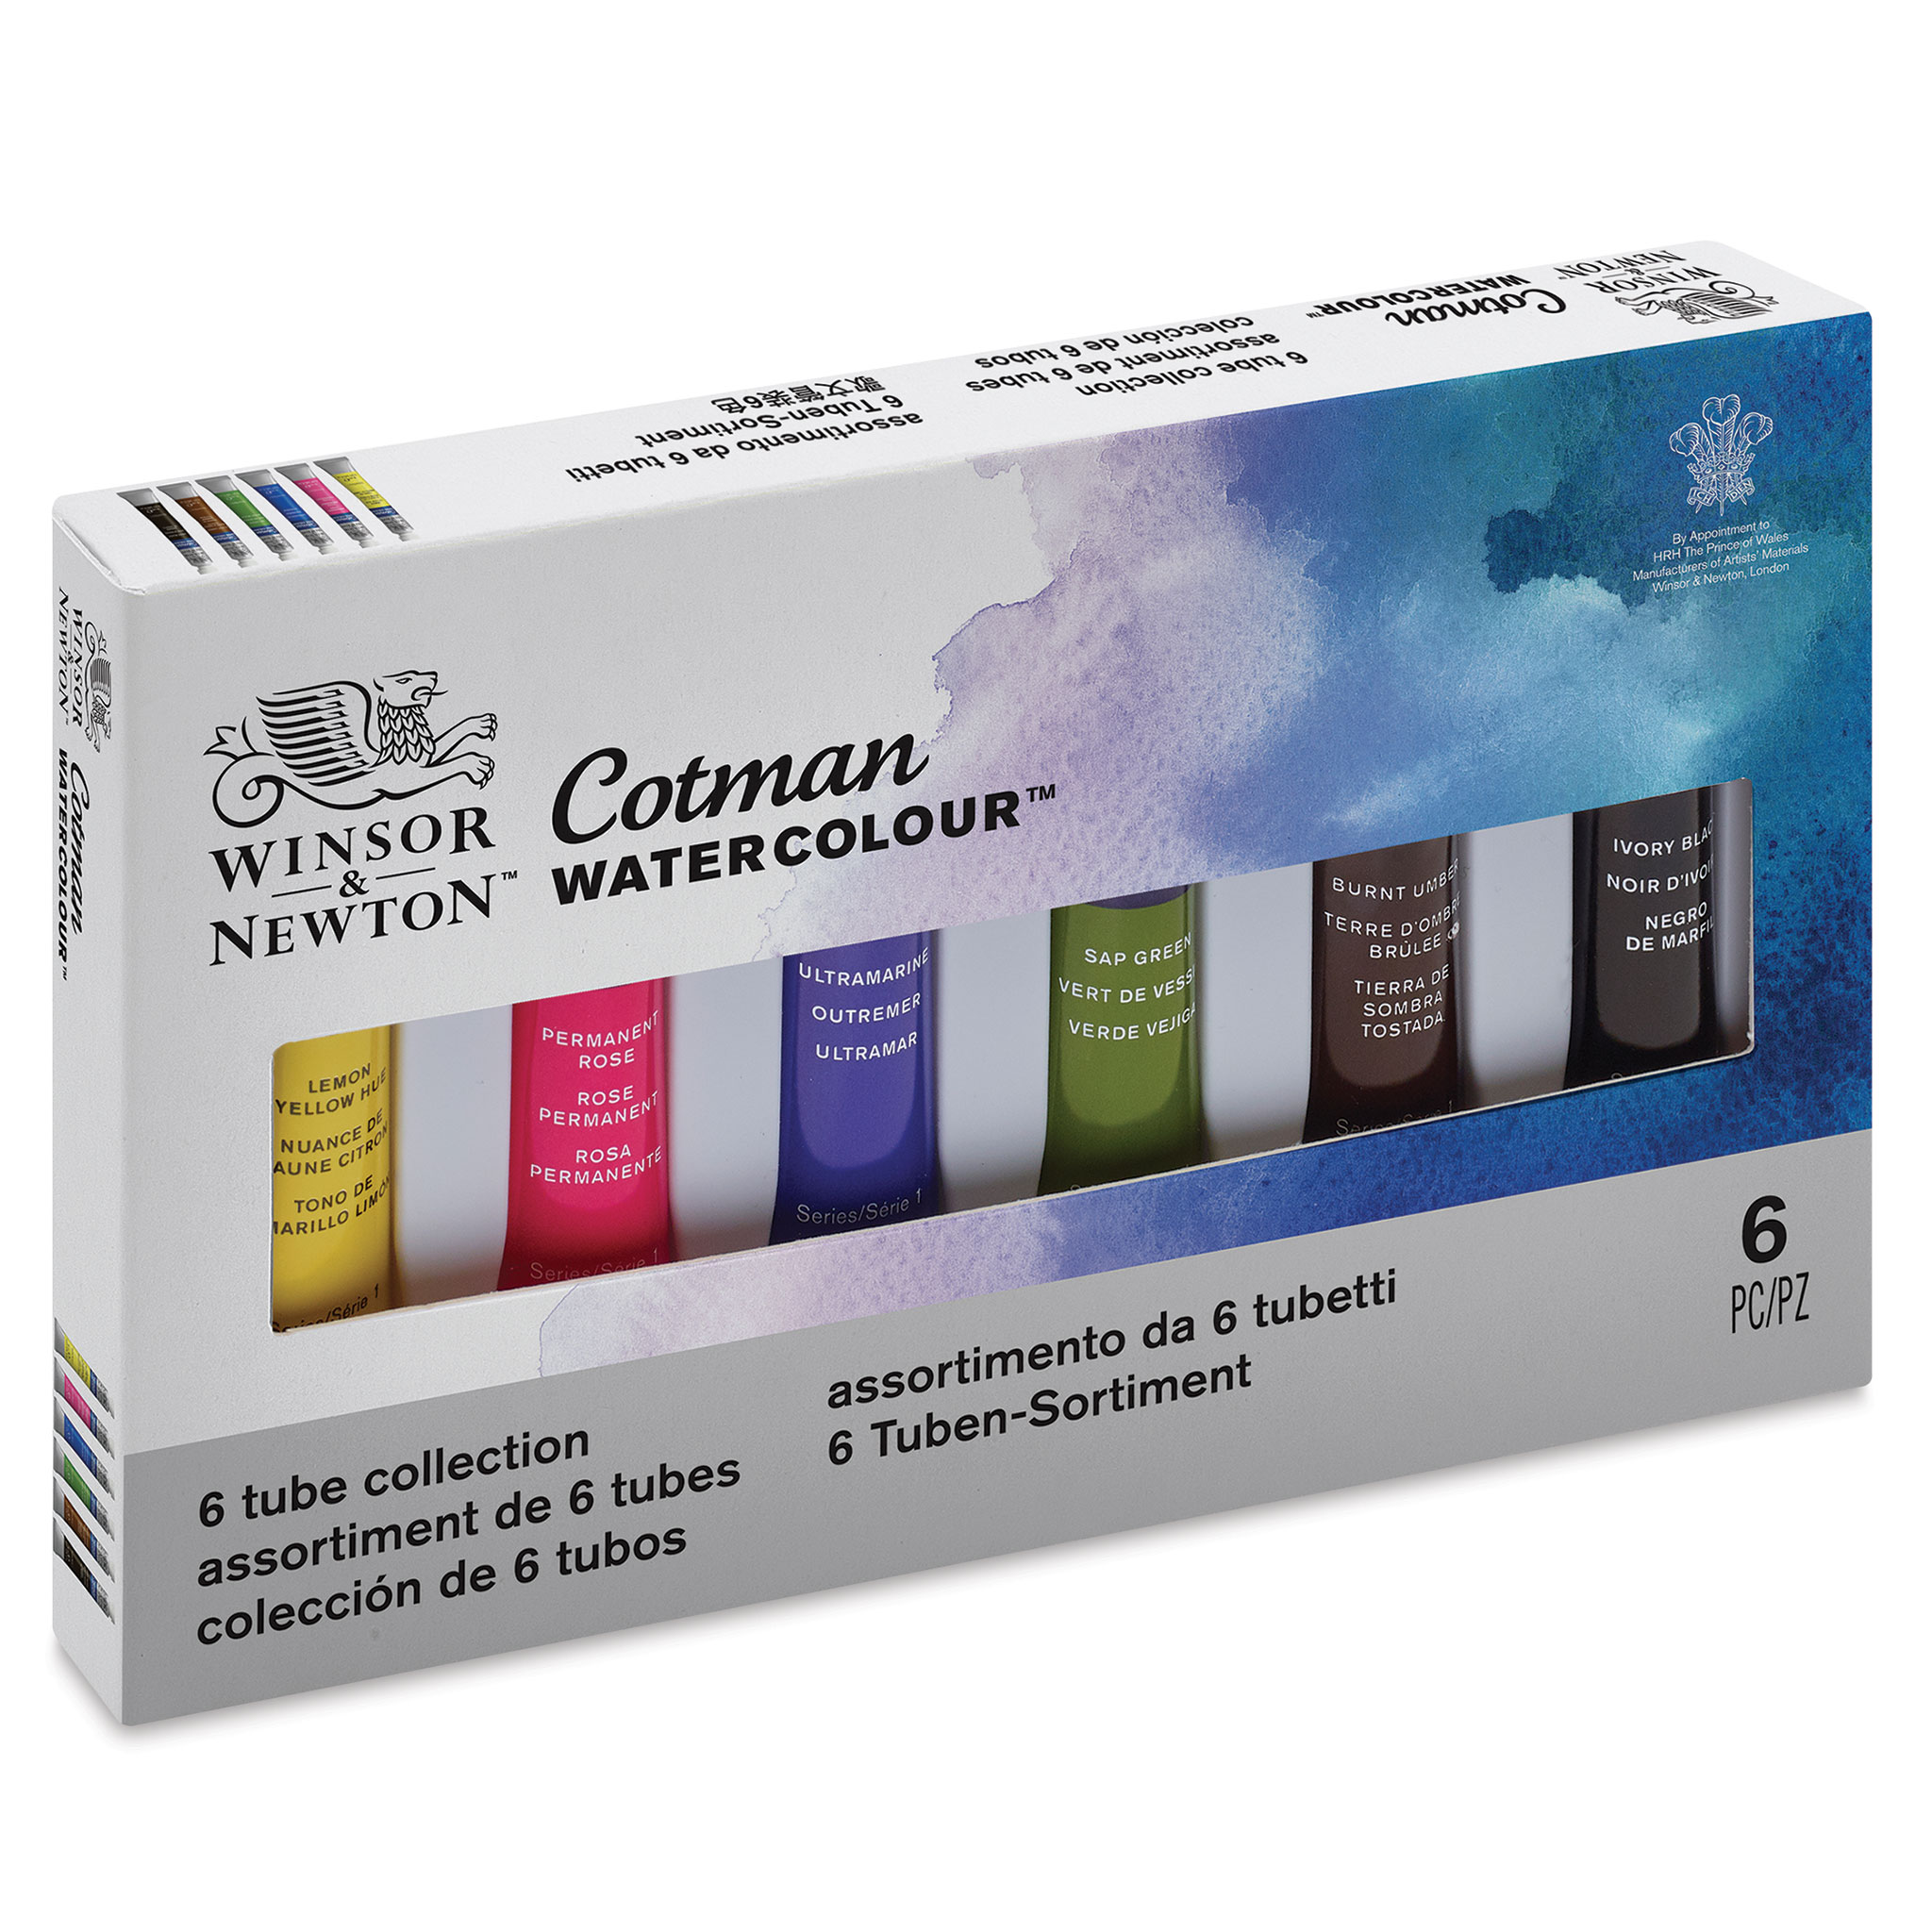 NEW, WINSOR & NEWTON Cotman Watercolor Palette Tube Travel Set